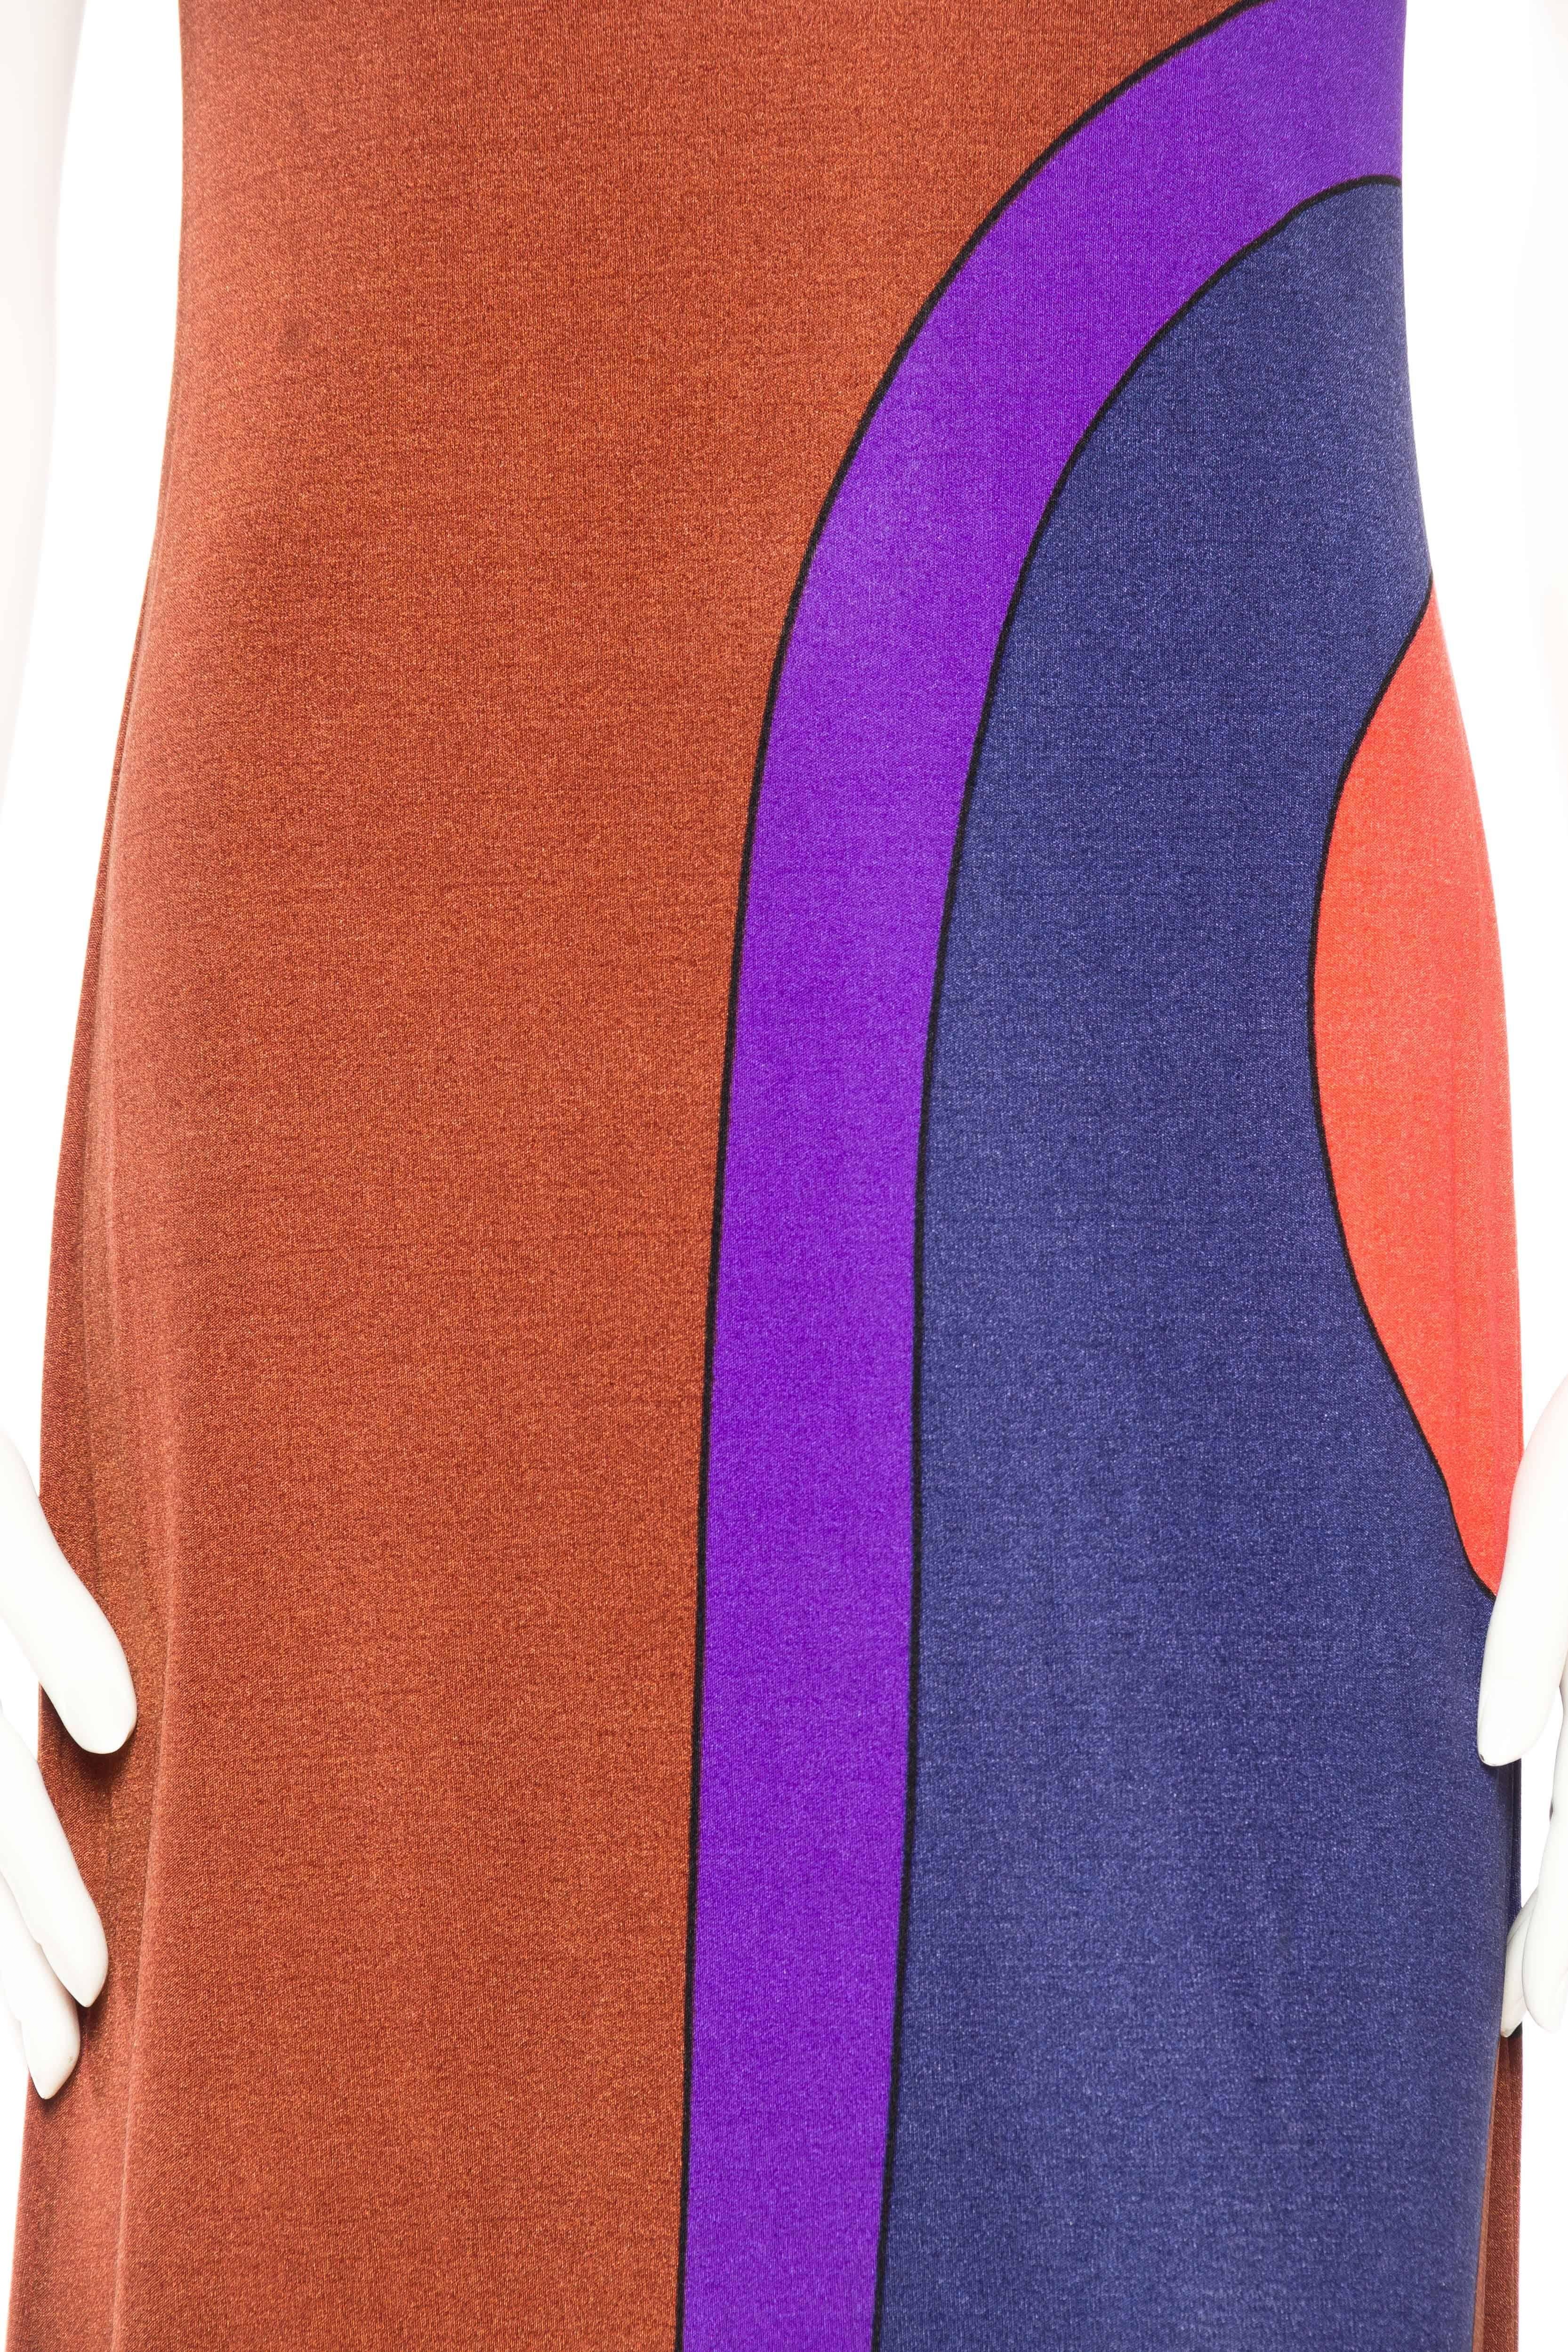 1960S LOUIS FÉRAUD Silk Jersey Large Scale Op-Art Mod Printed Dress 2